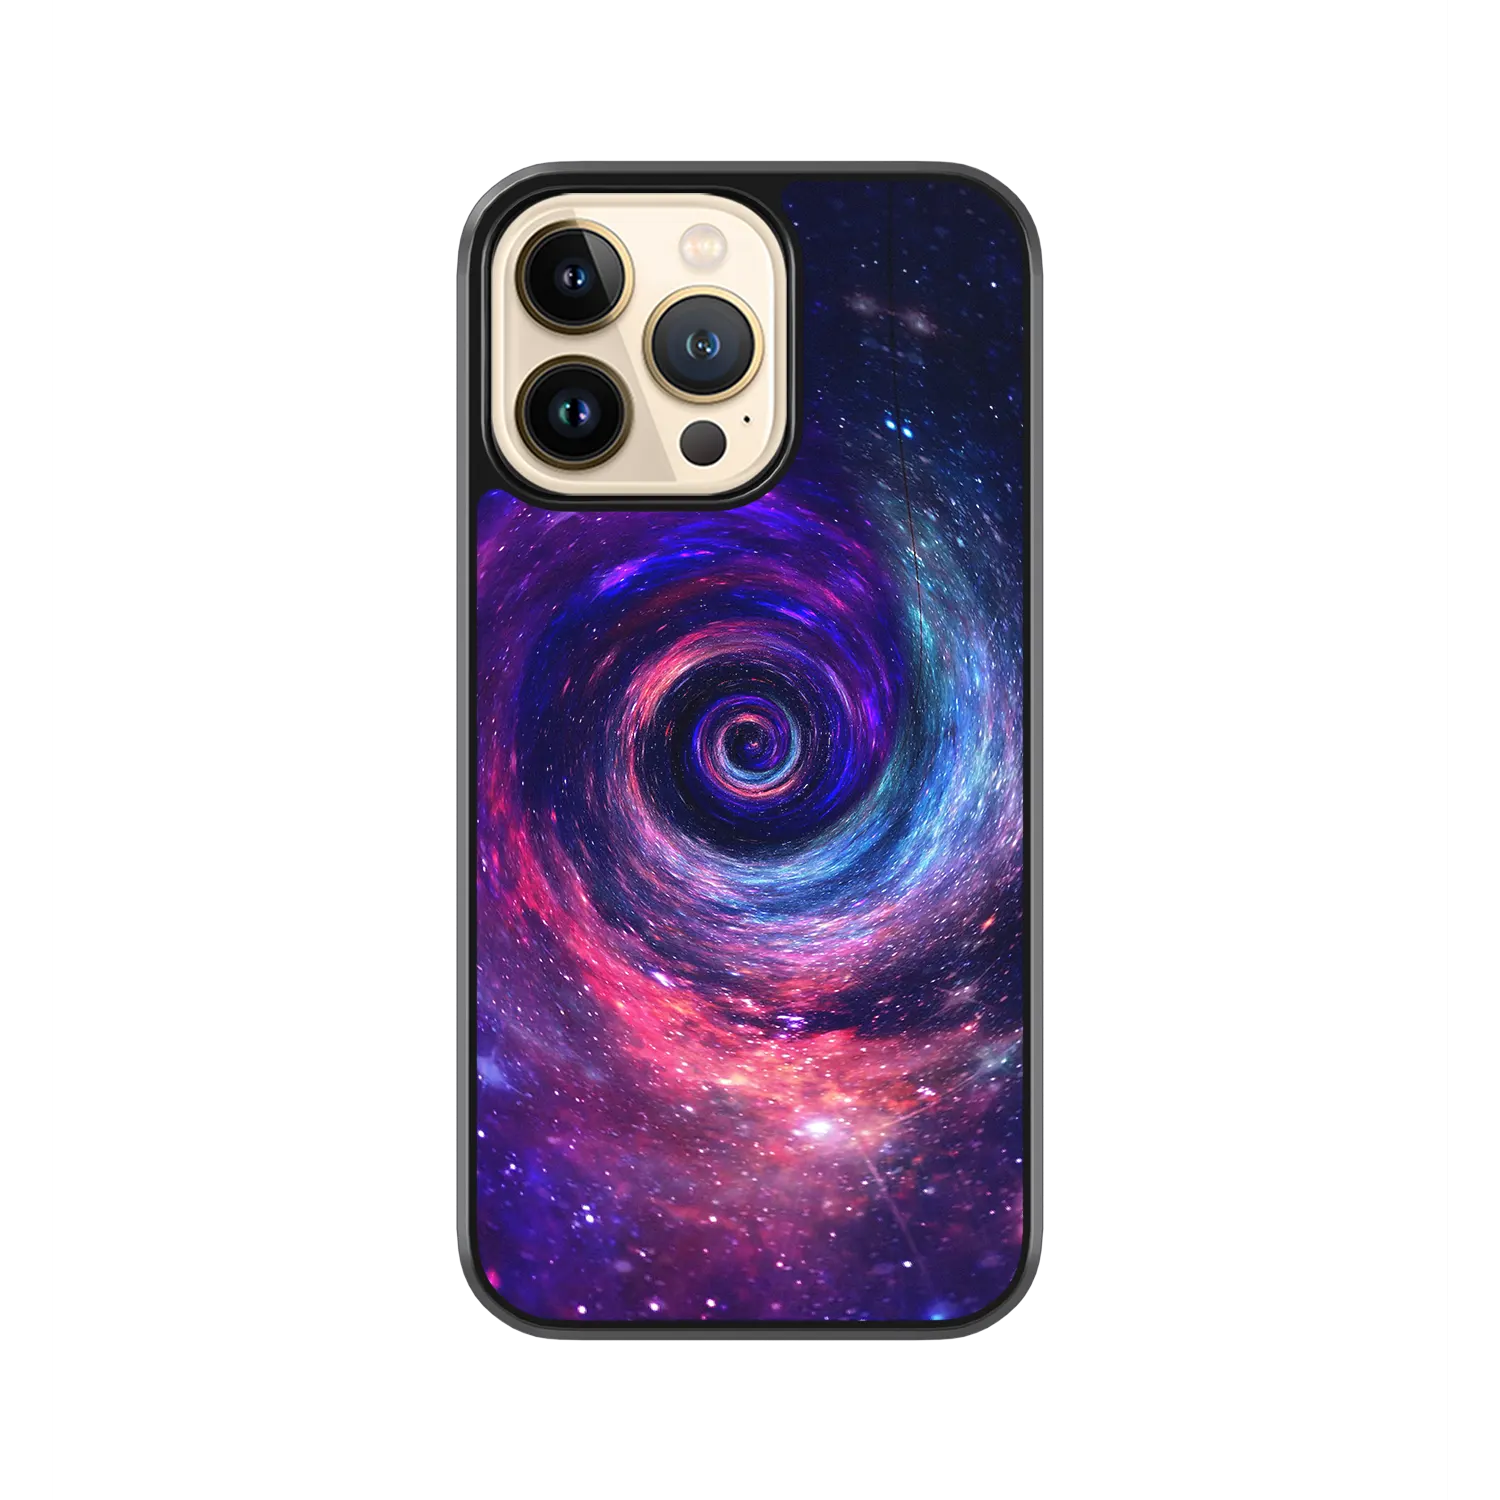 Black Hole iPhone 12 Pro Max Case